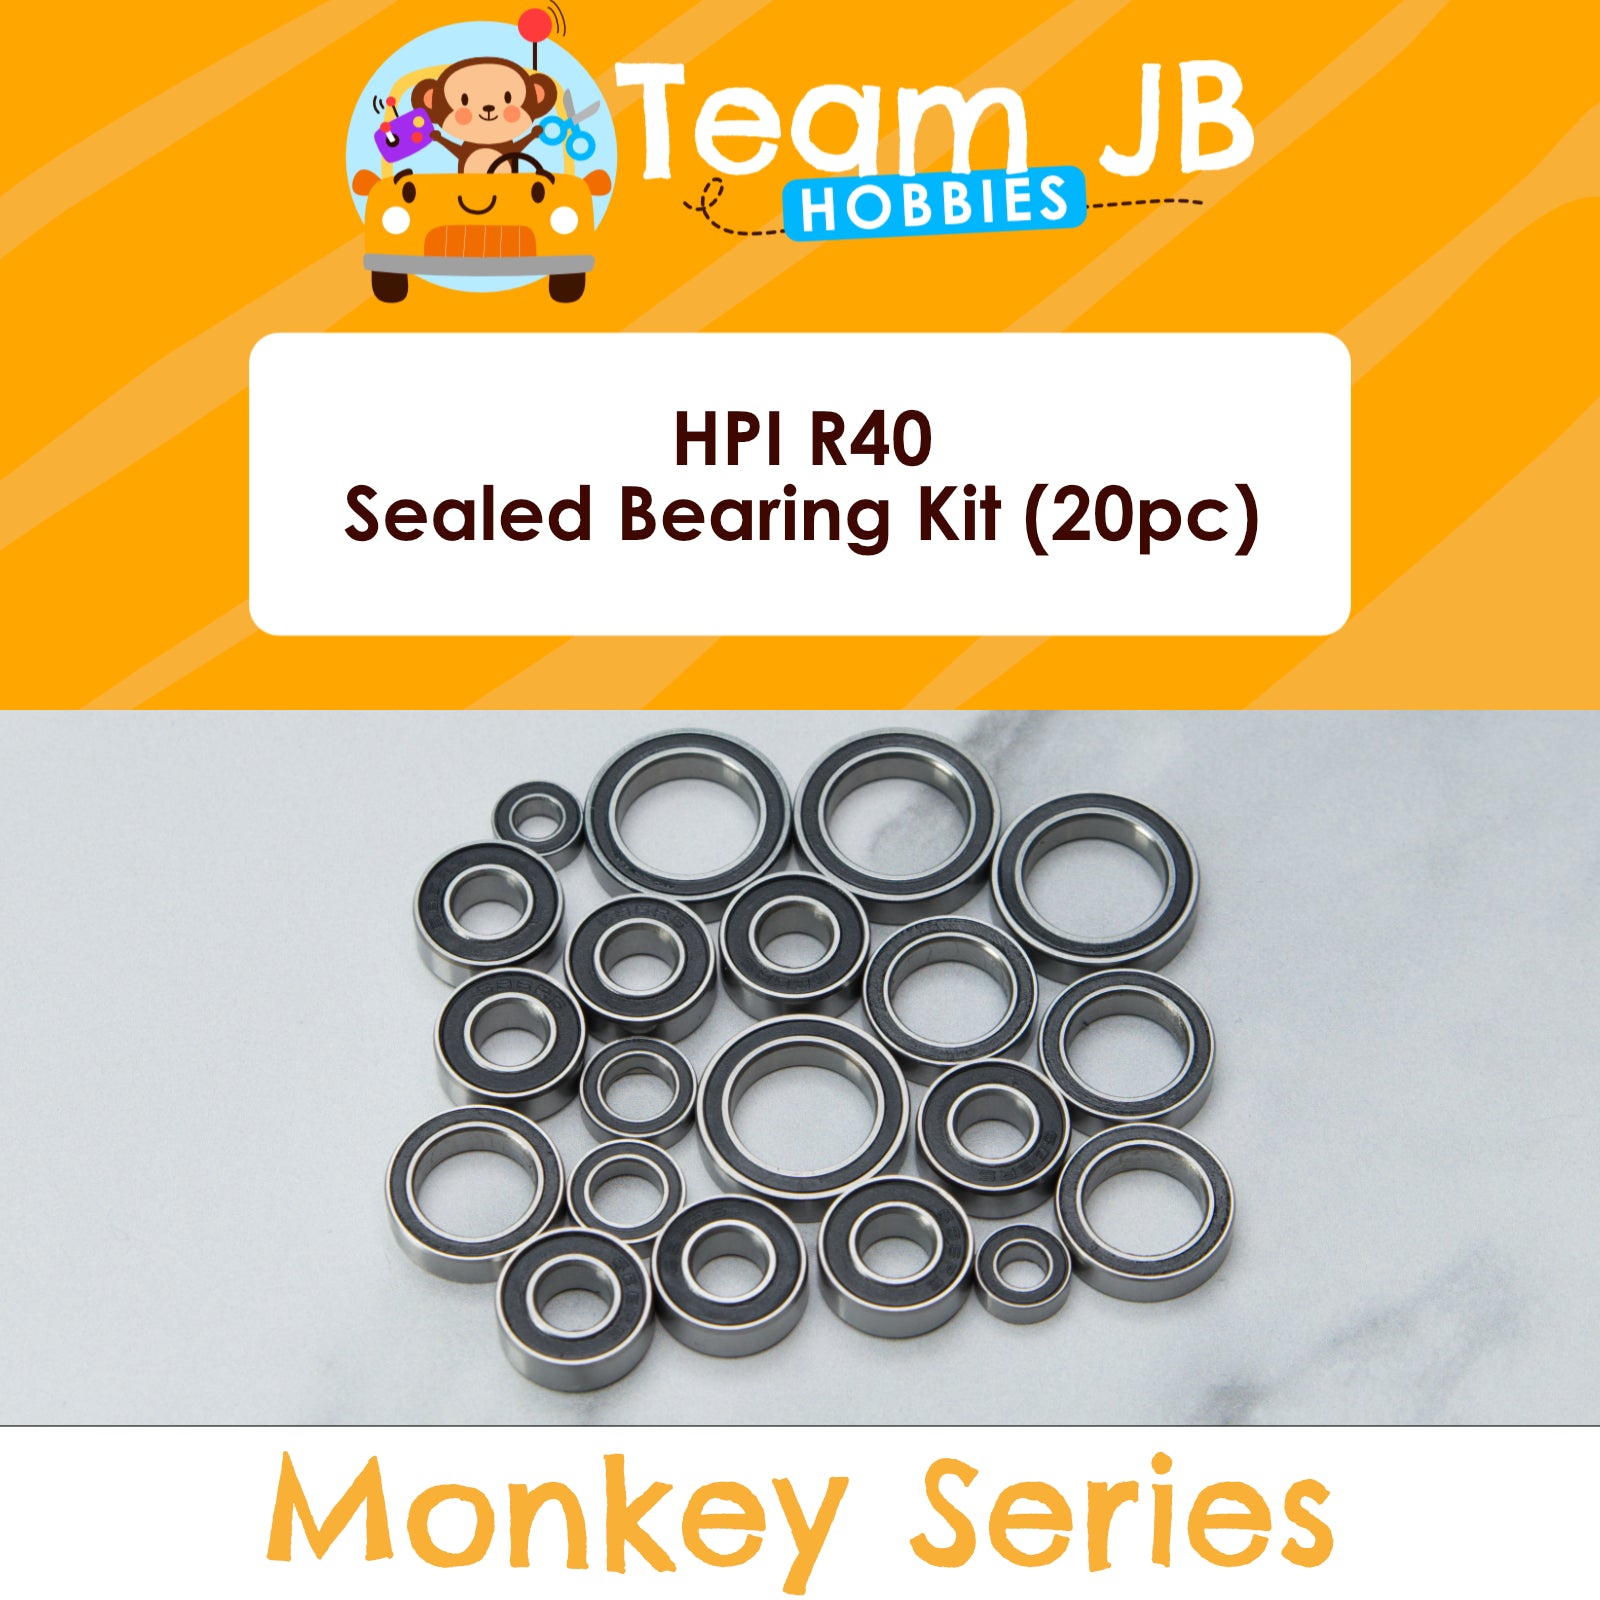 HPI R40 - Sealed Bearing Kit